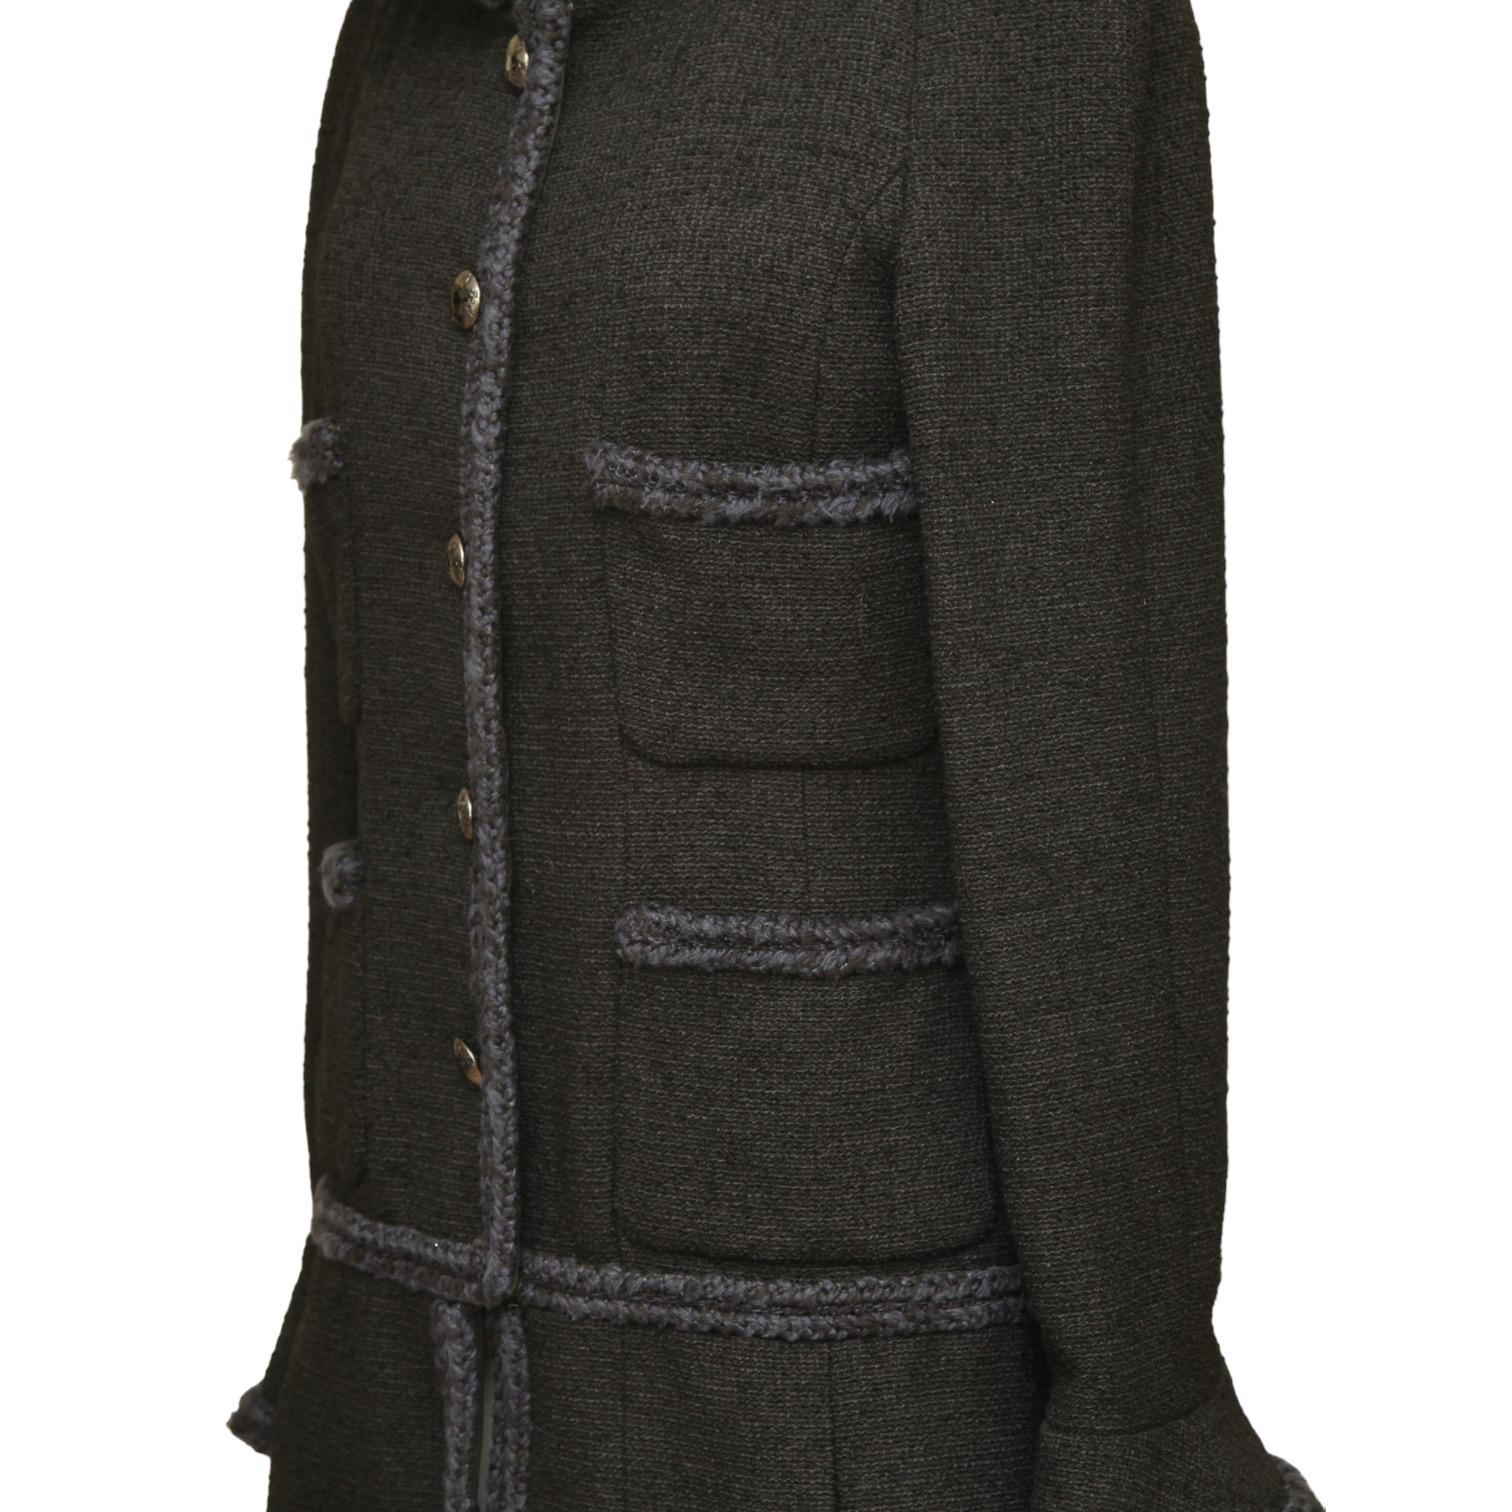 CHANEL  Black Jacket Tweed Wool Braided Gunmetal Buttons Pockets 40 2013 RUNWAY 1